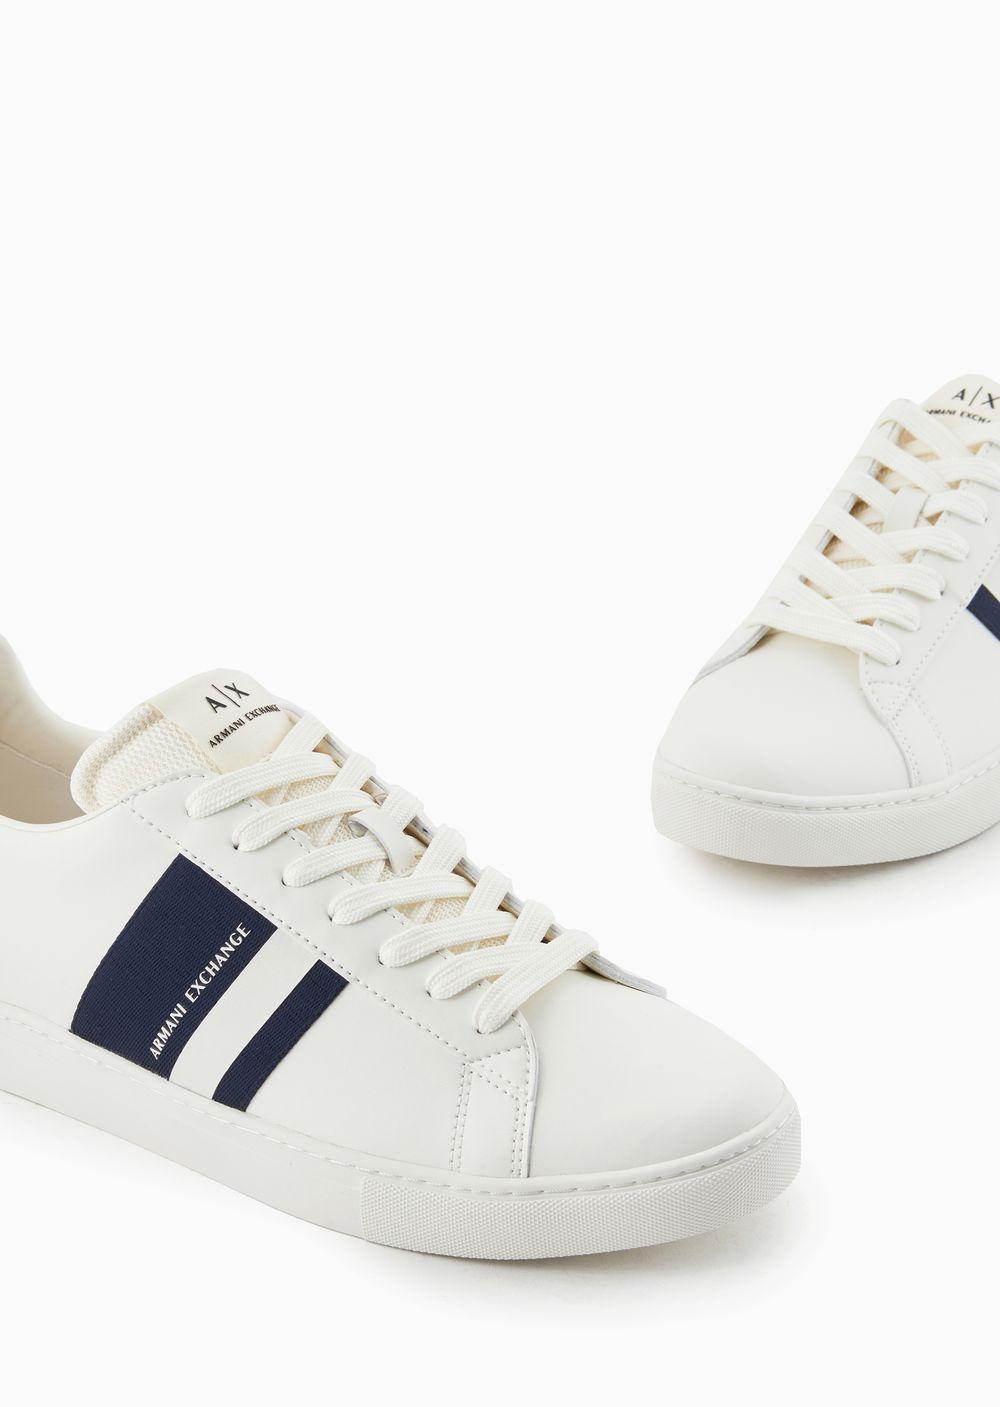 White Sneakers for Men - Hockerty